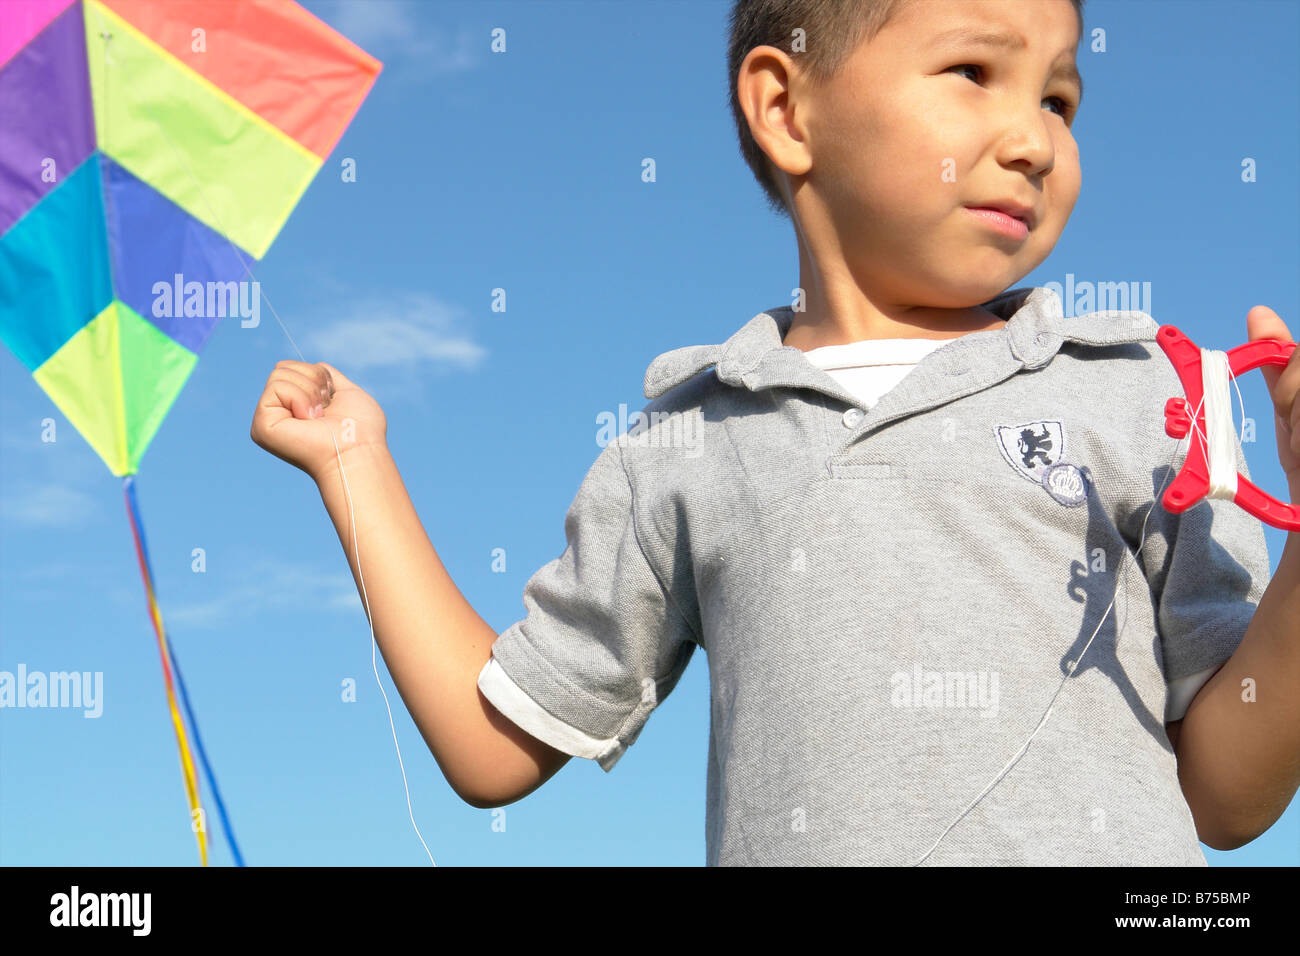 Six year old boy with kite, Winnipeg, Canada Stock Photo